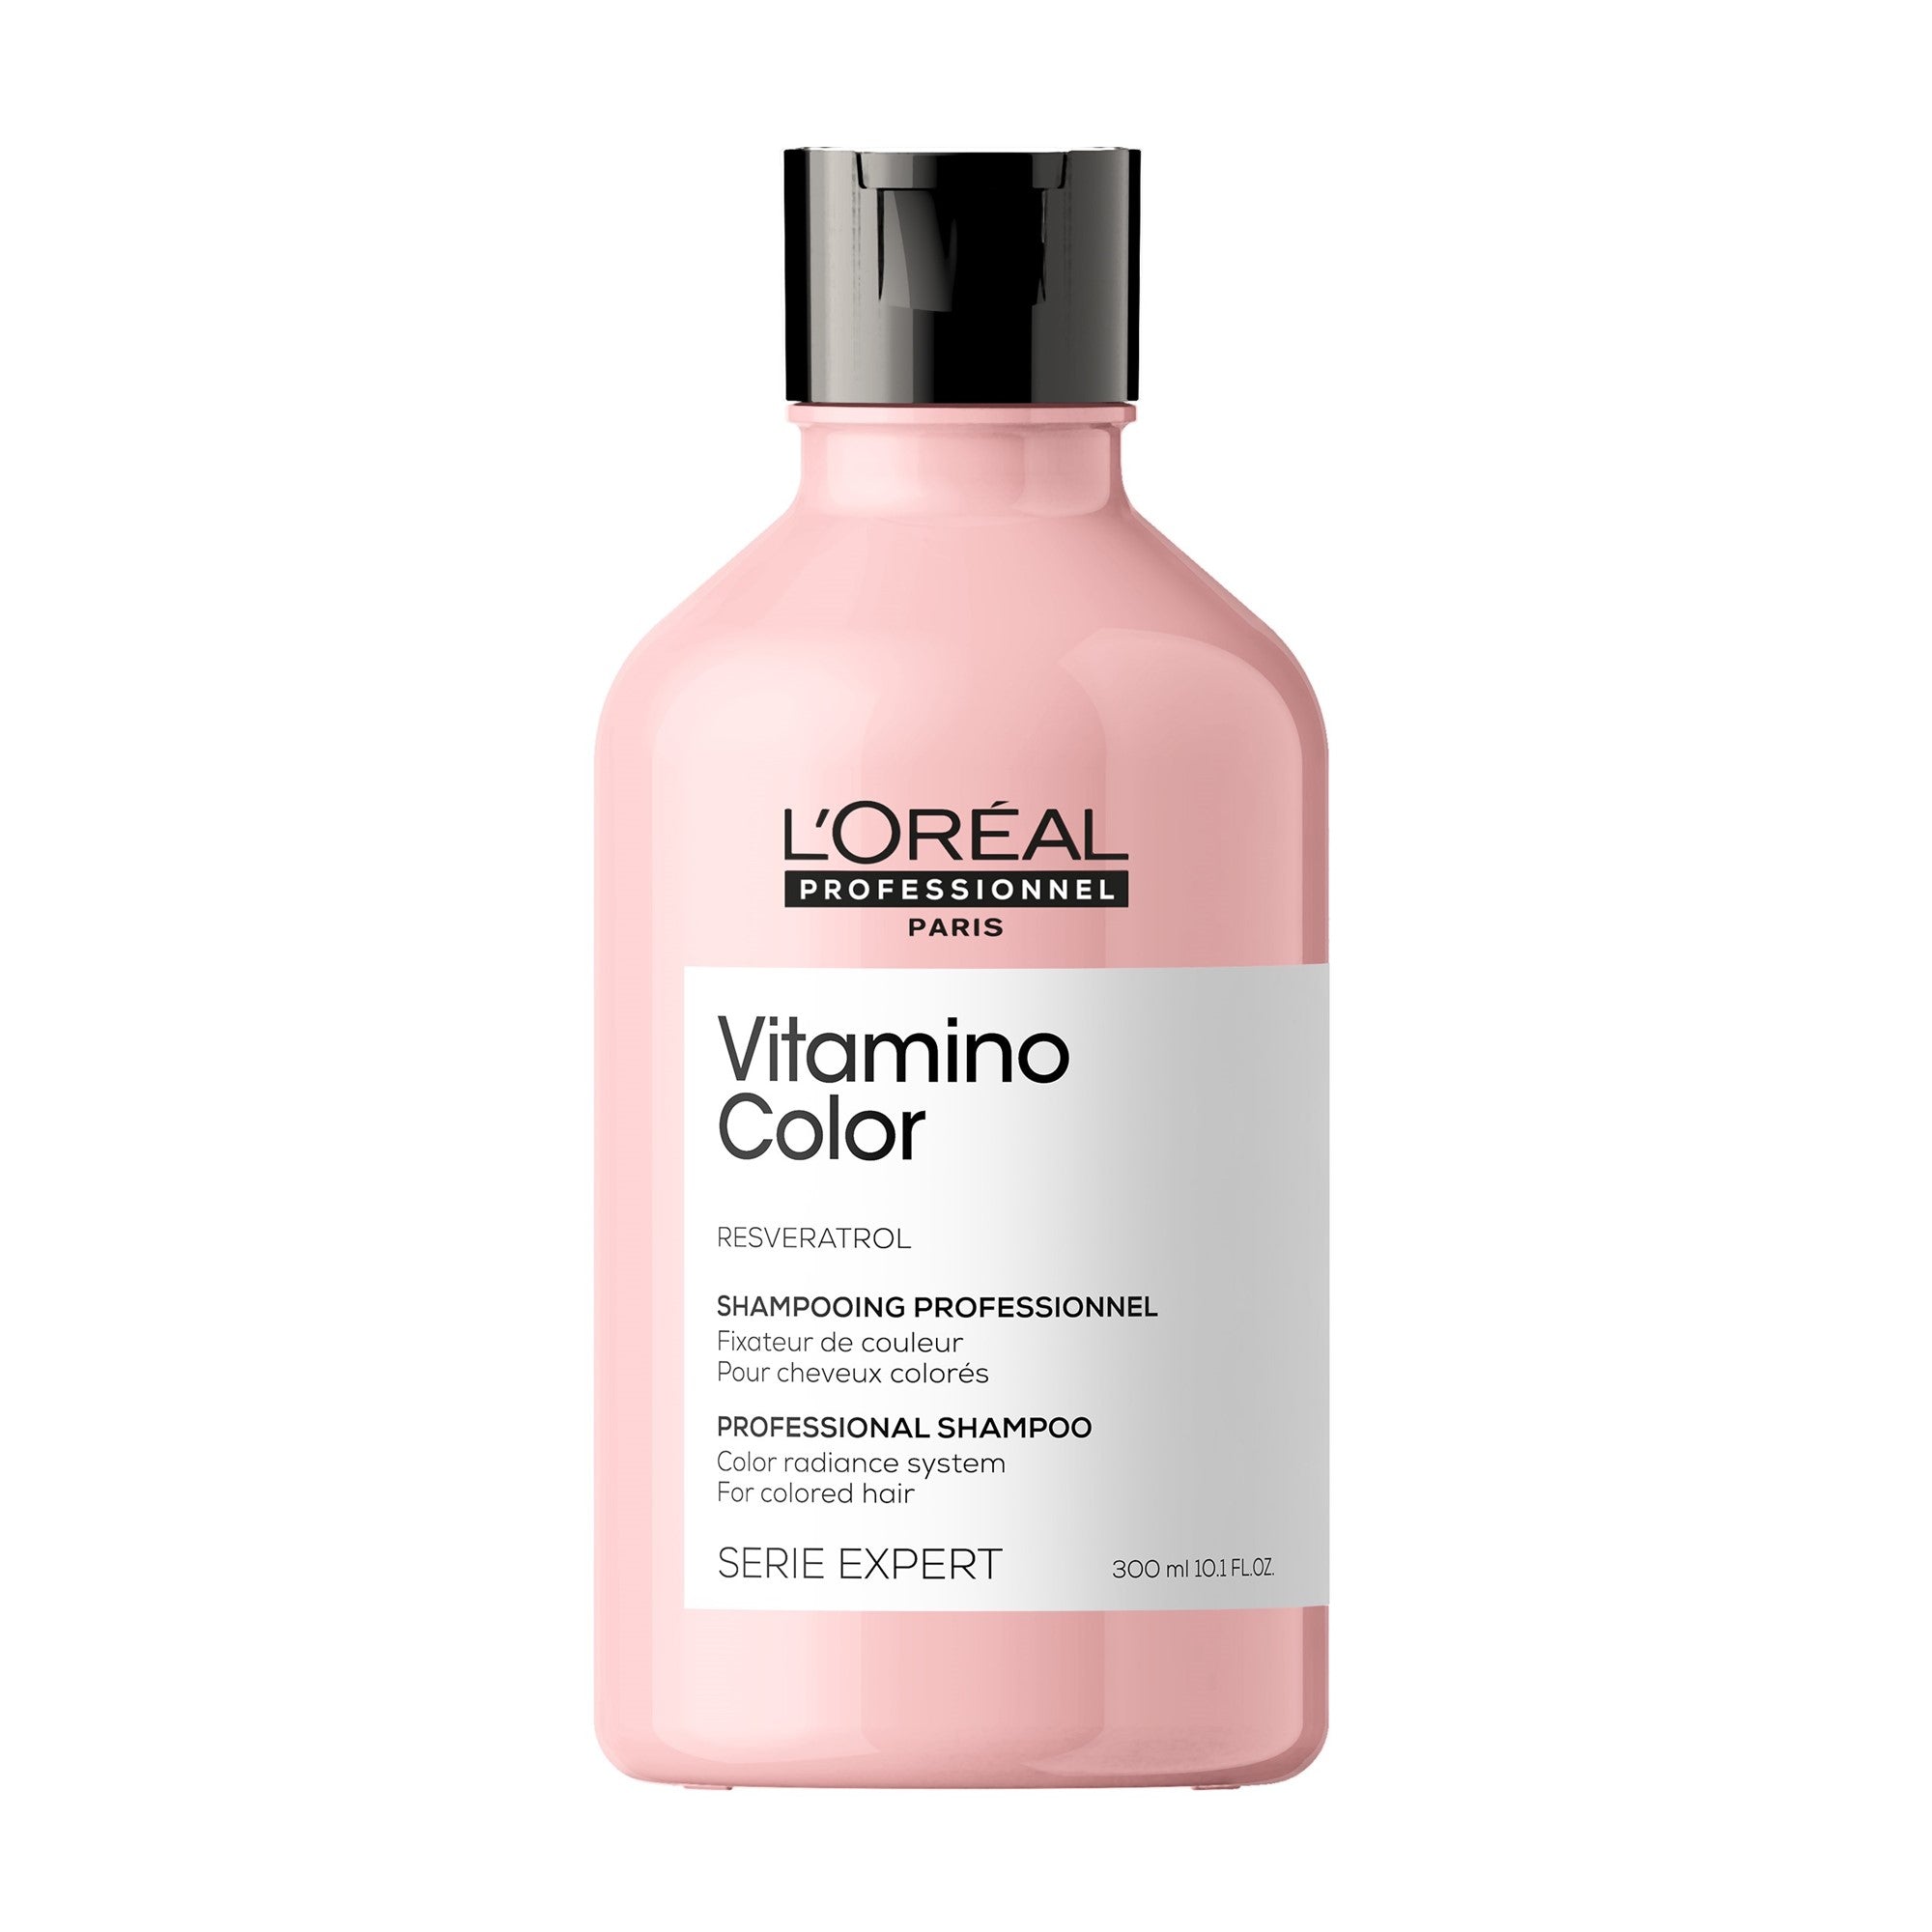 Loreal Resveratrol Vitamino Color Shampoo 300ml